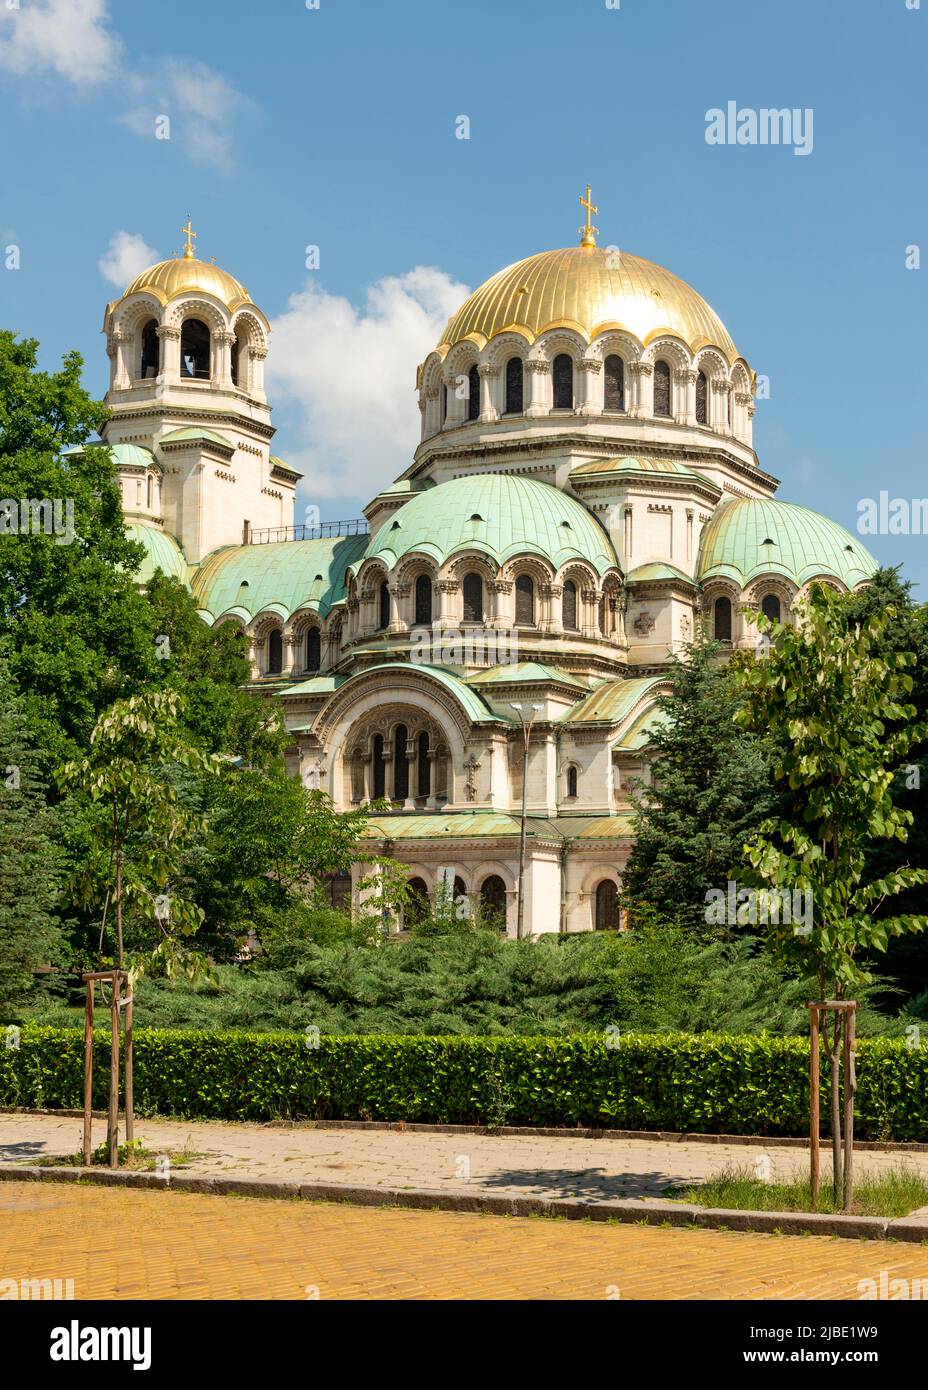 Goldene Kuppeln architektonische Detail der St. Alexander Newski orthodoxen Kathedrale in Sofia, Bulgarien, Balkan, Europa Stockfoto